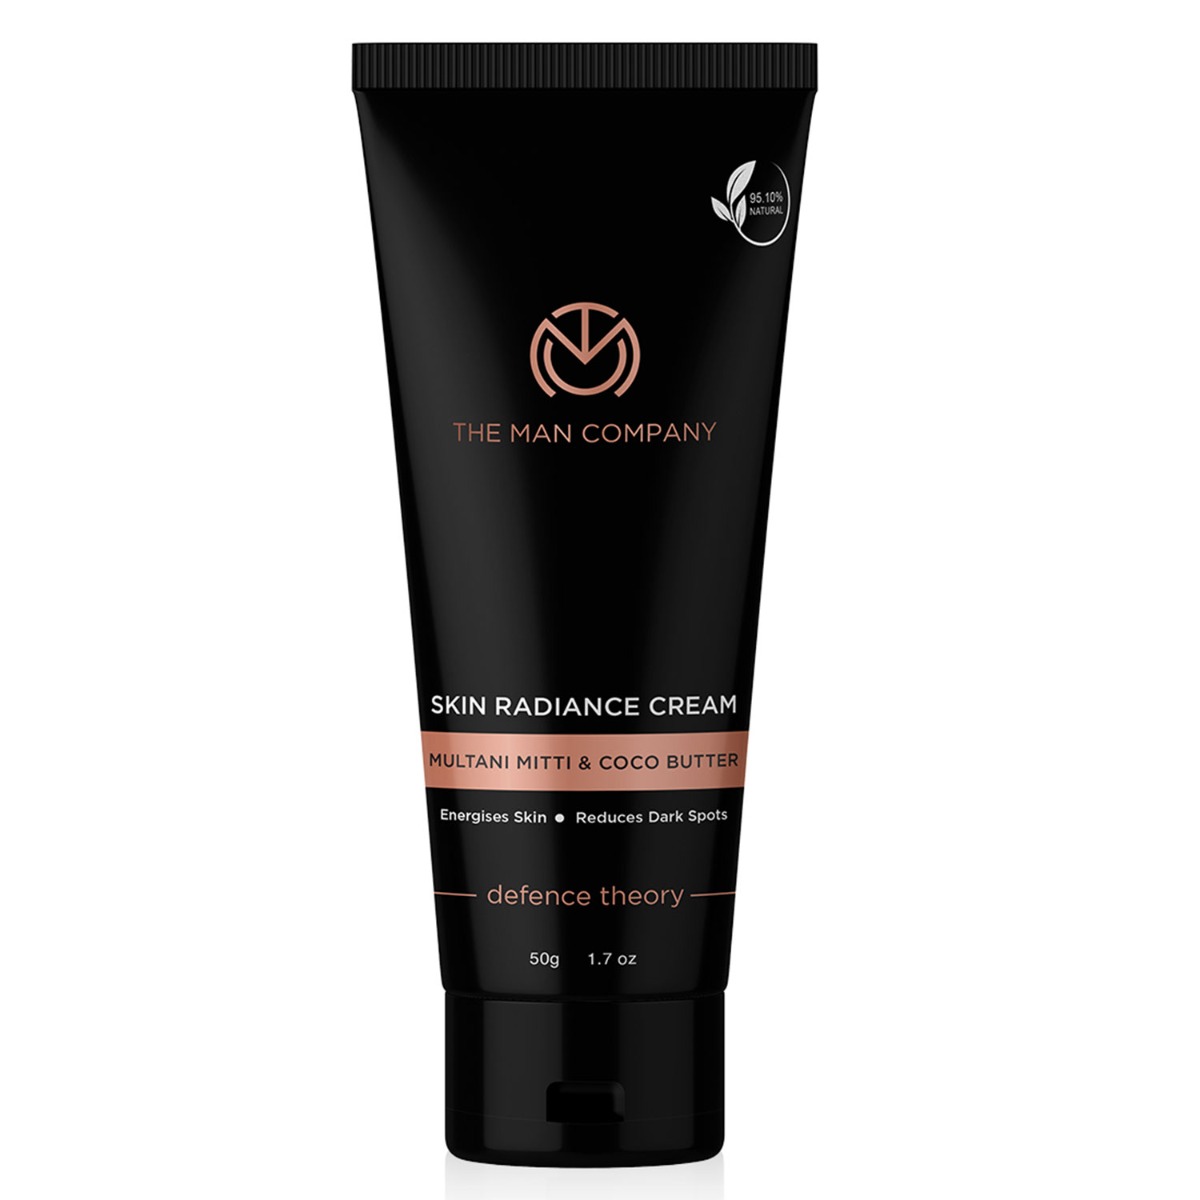 The Man Company Skin Radiance Cream, 50gm